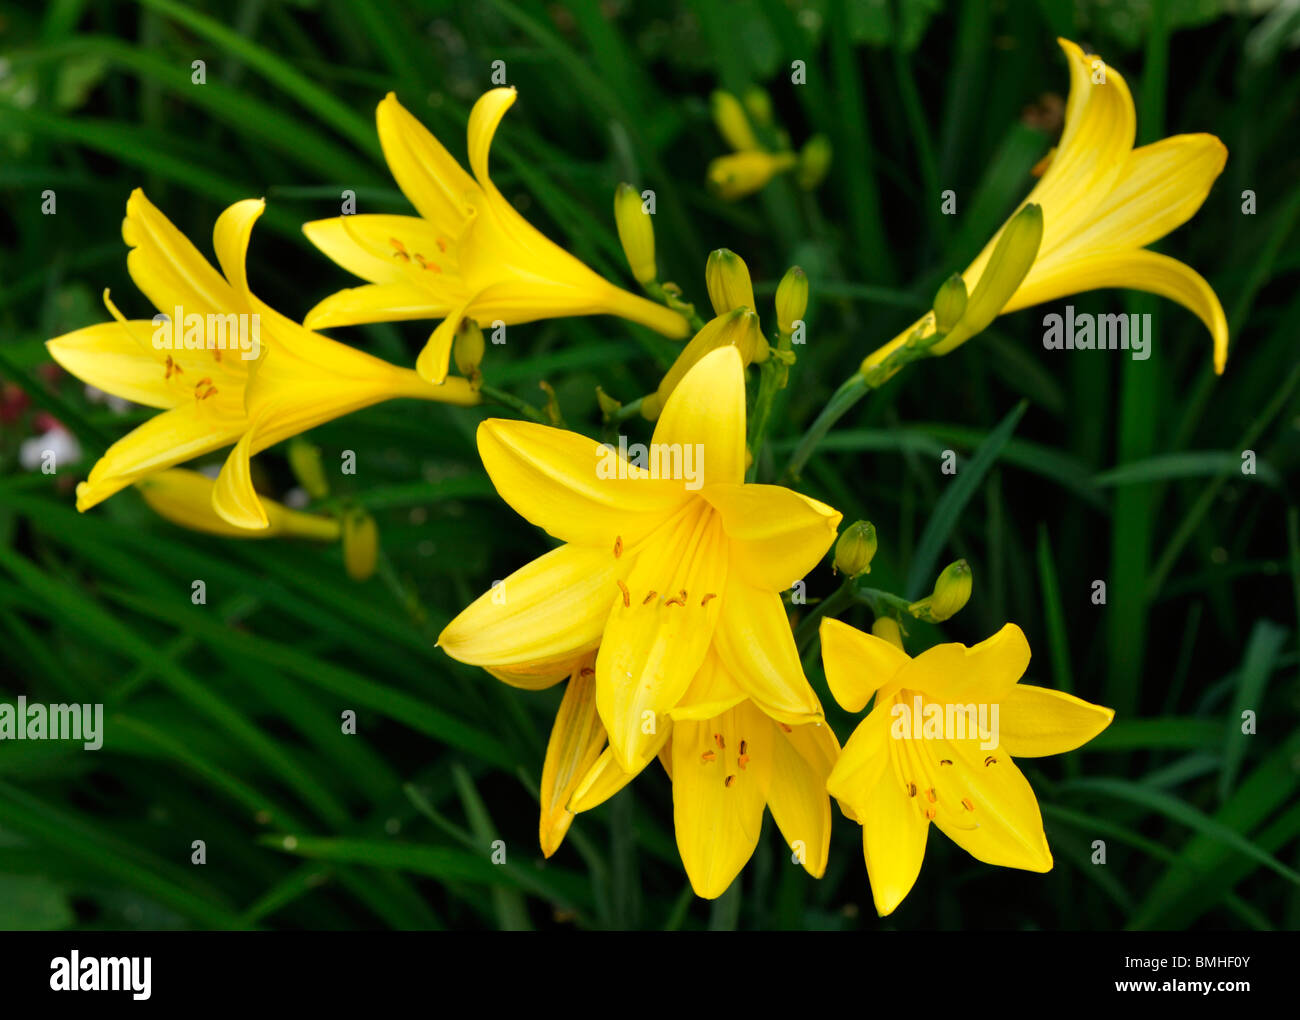 Hemerocallis Lilioasphodelus, common name daylily. Stock Photo